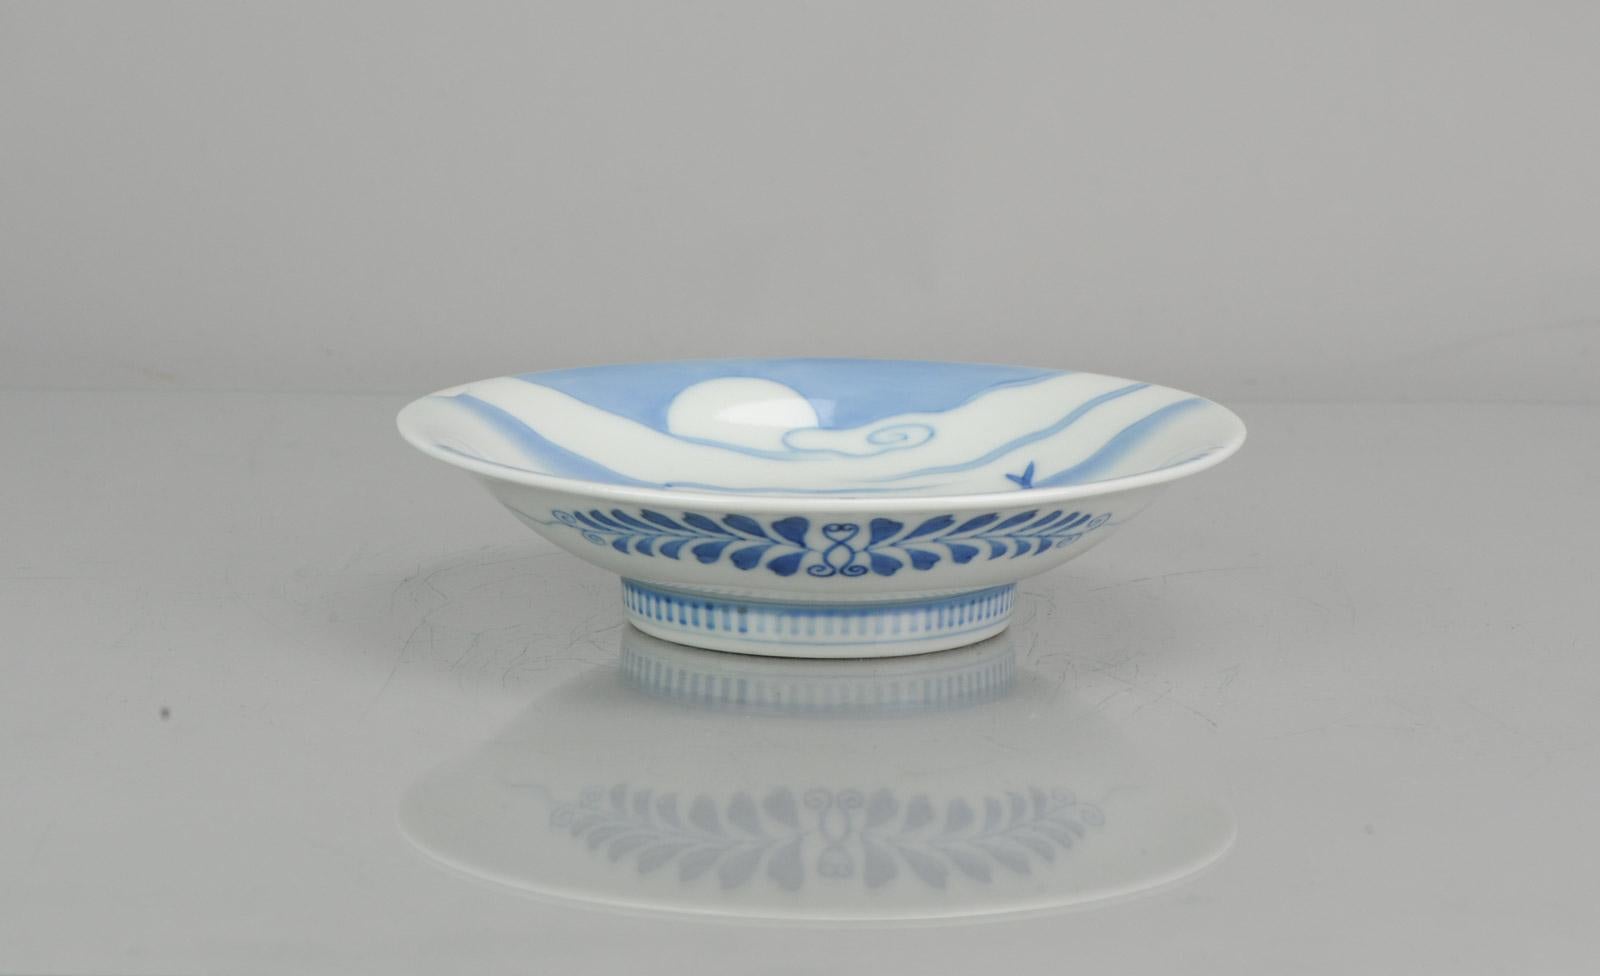 Porcelain Art Japanese Nabeshima Footed Bowl Meiji Taisho Period, 19/20th Century.

A very nice bowl footed bowl from Nabeshima.

Additional information:
Material: Porcelain & Pottery
Type: Plates
Region of Origin: Japan
Period: 17th century, 18th